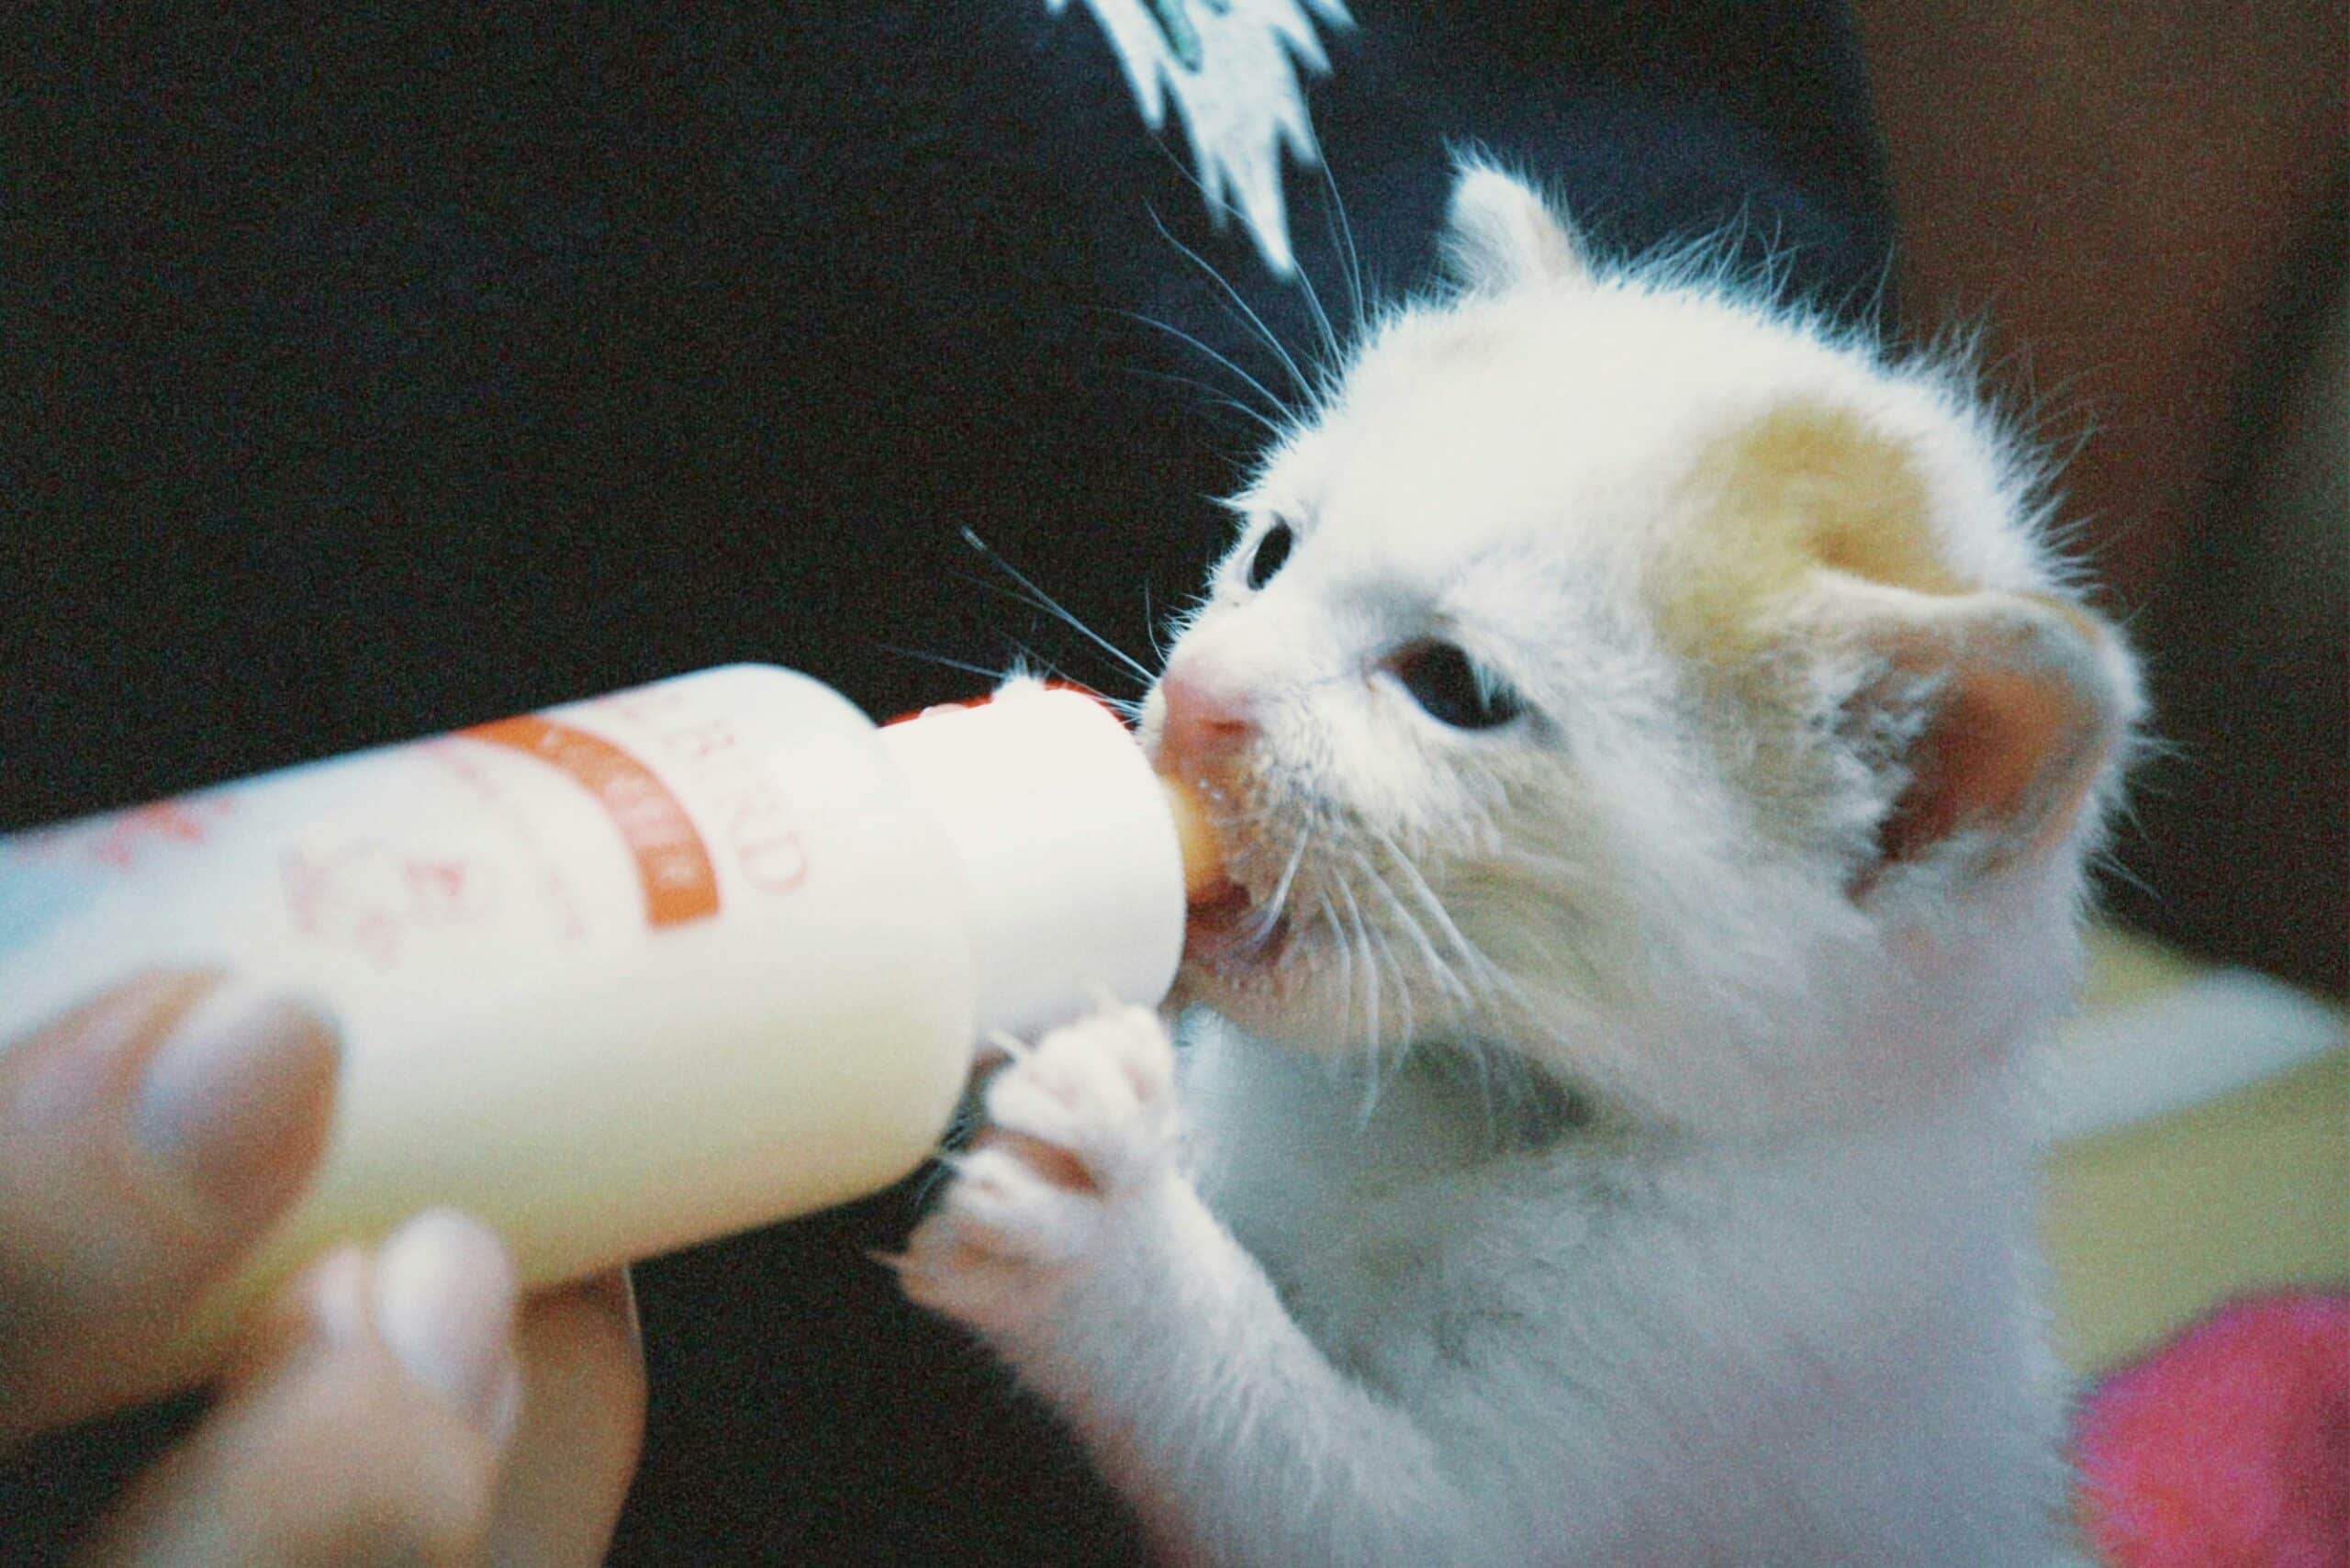 kitten being bottle fed